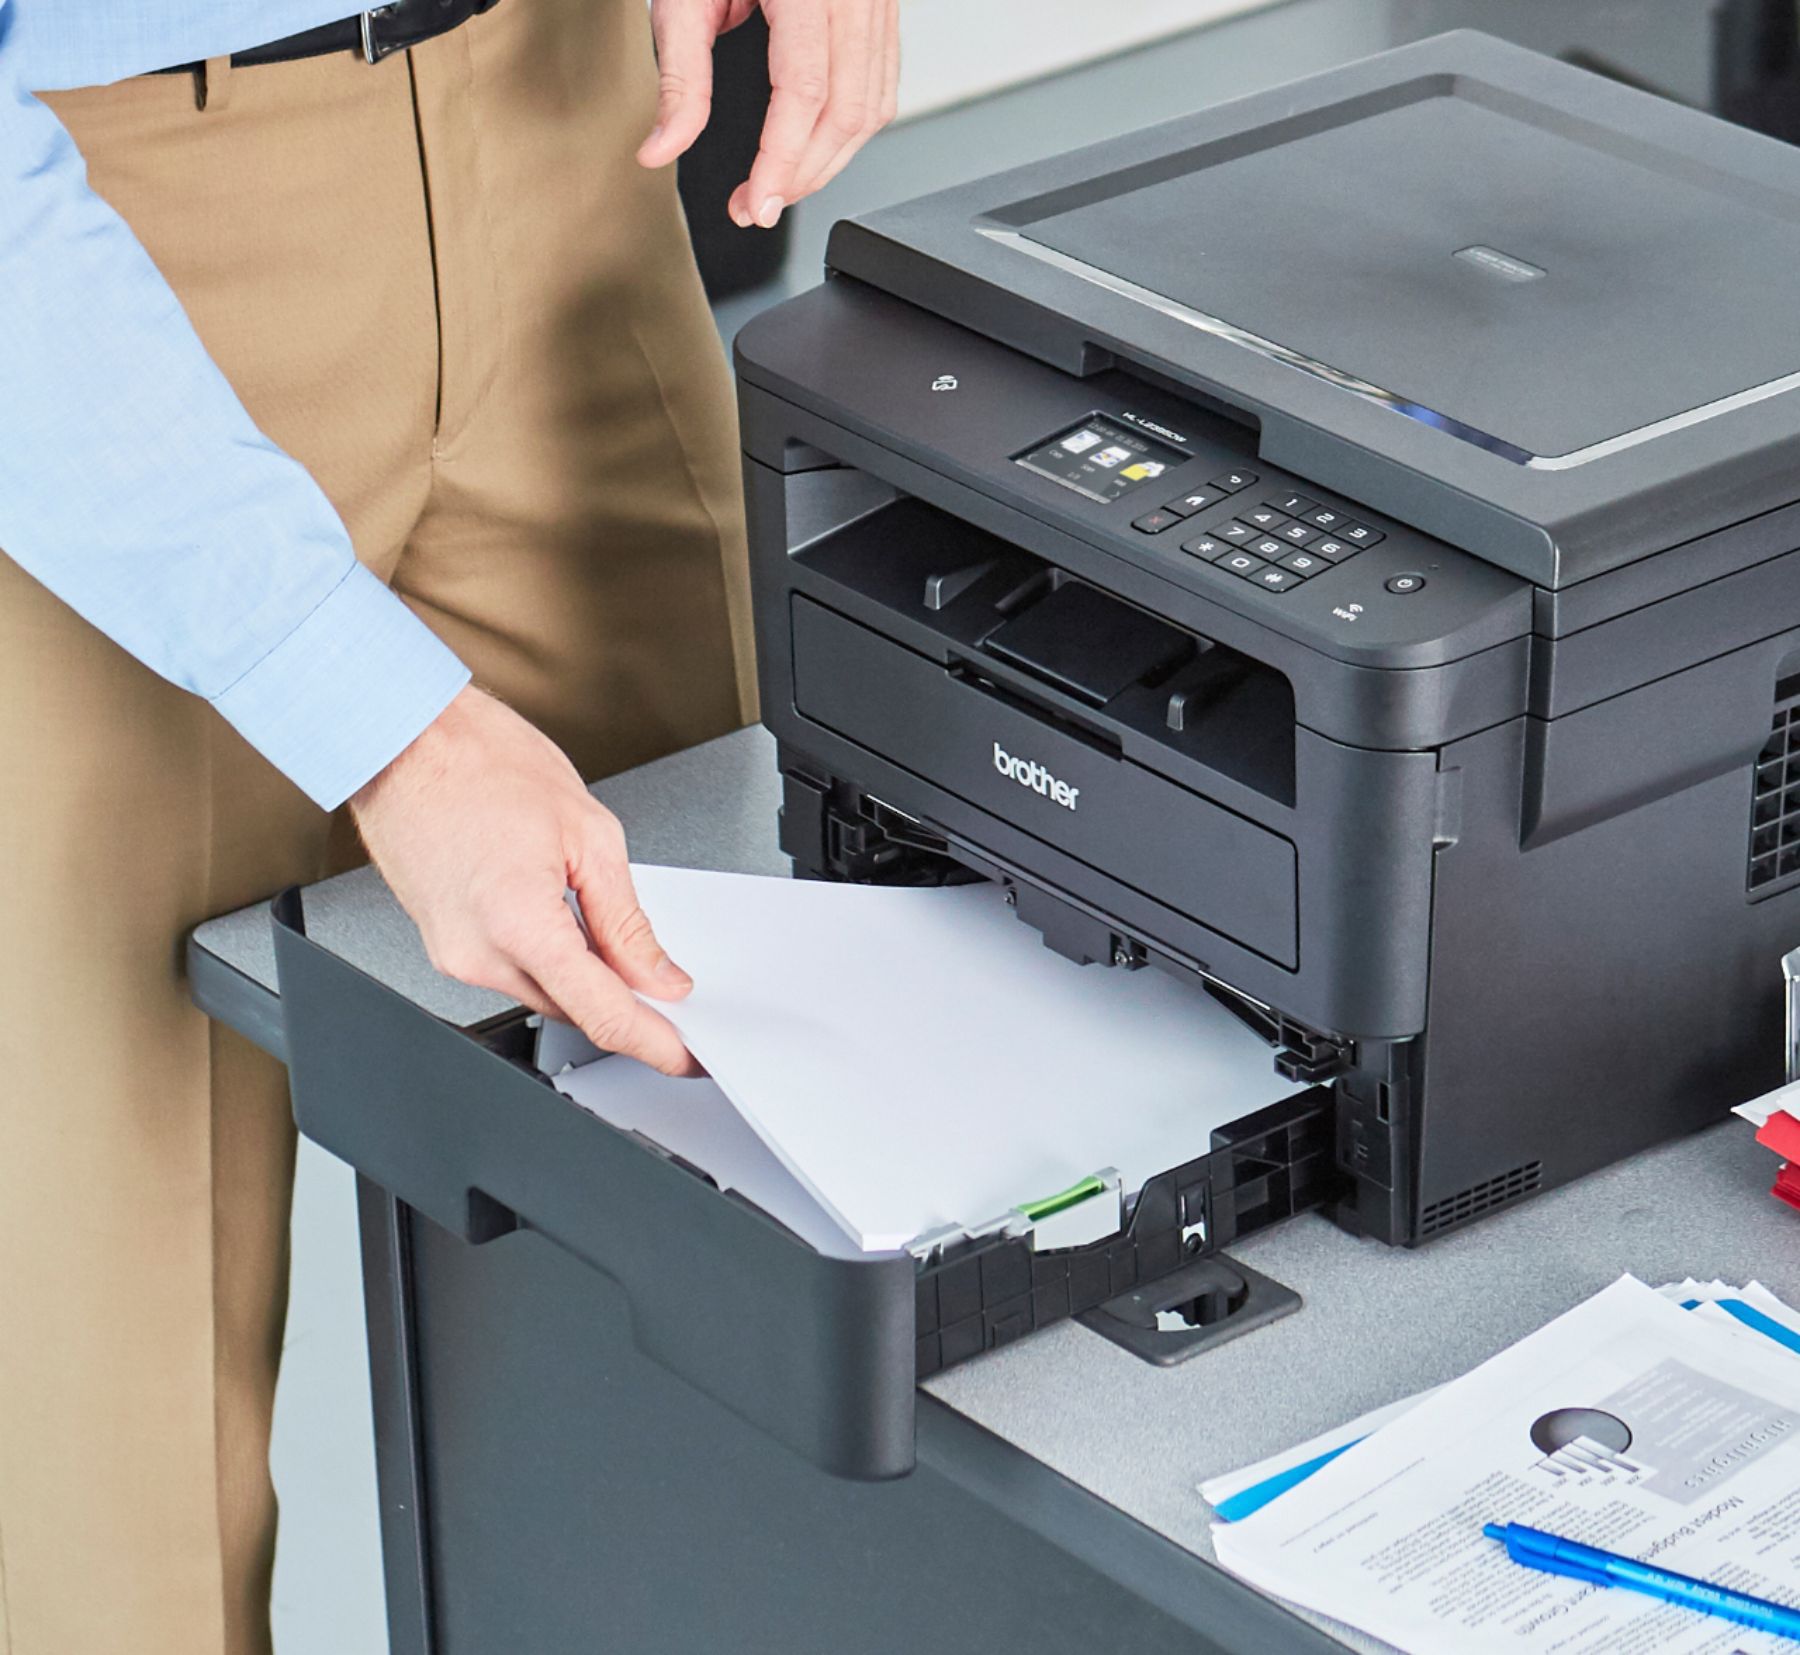 #Printer #LaserPrinter #Scanner #Copier (WILLING TO TRADE FOR EXECUTIVE DESK)